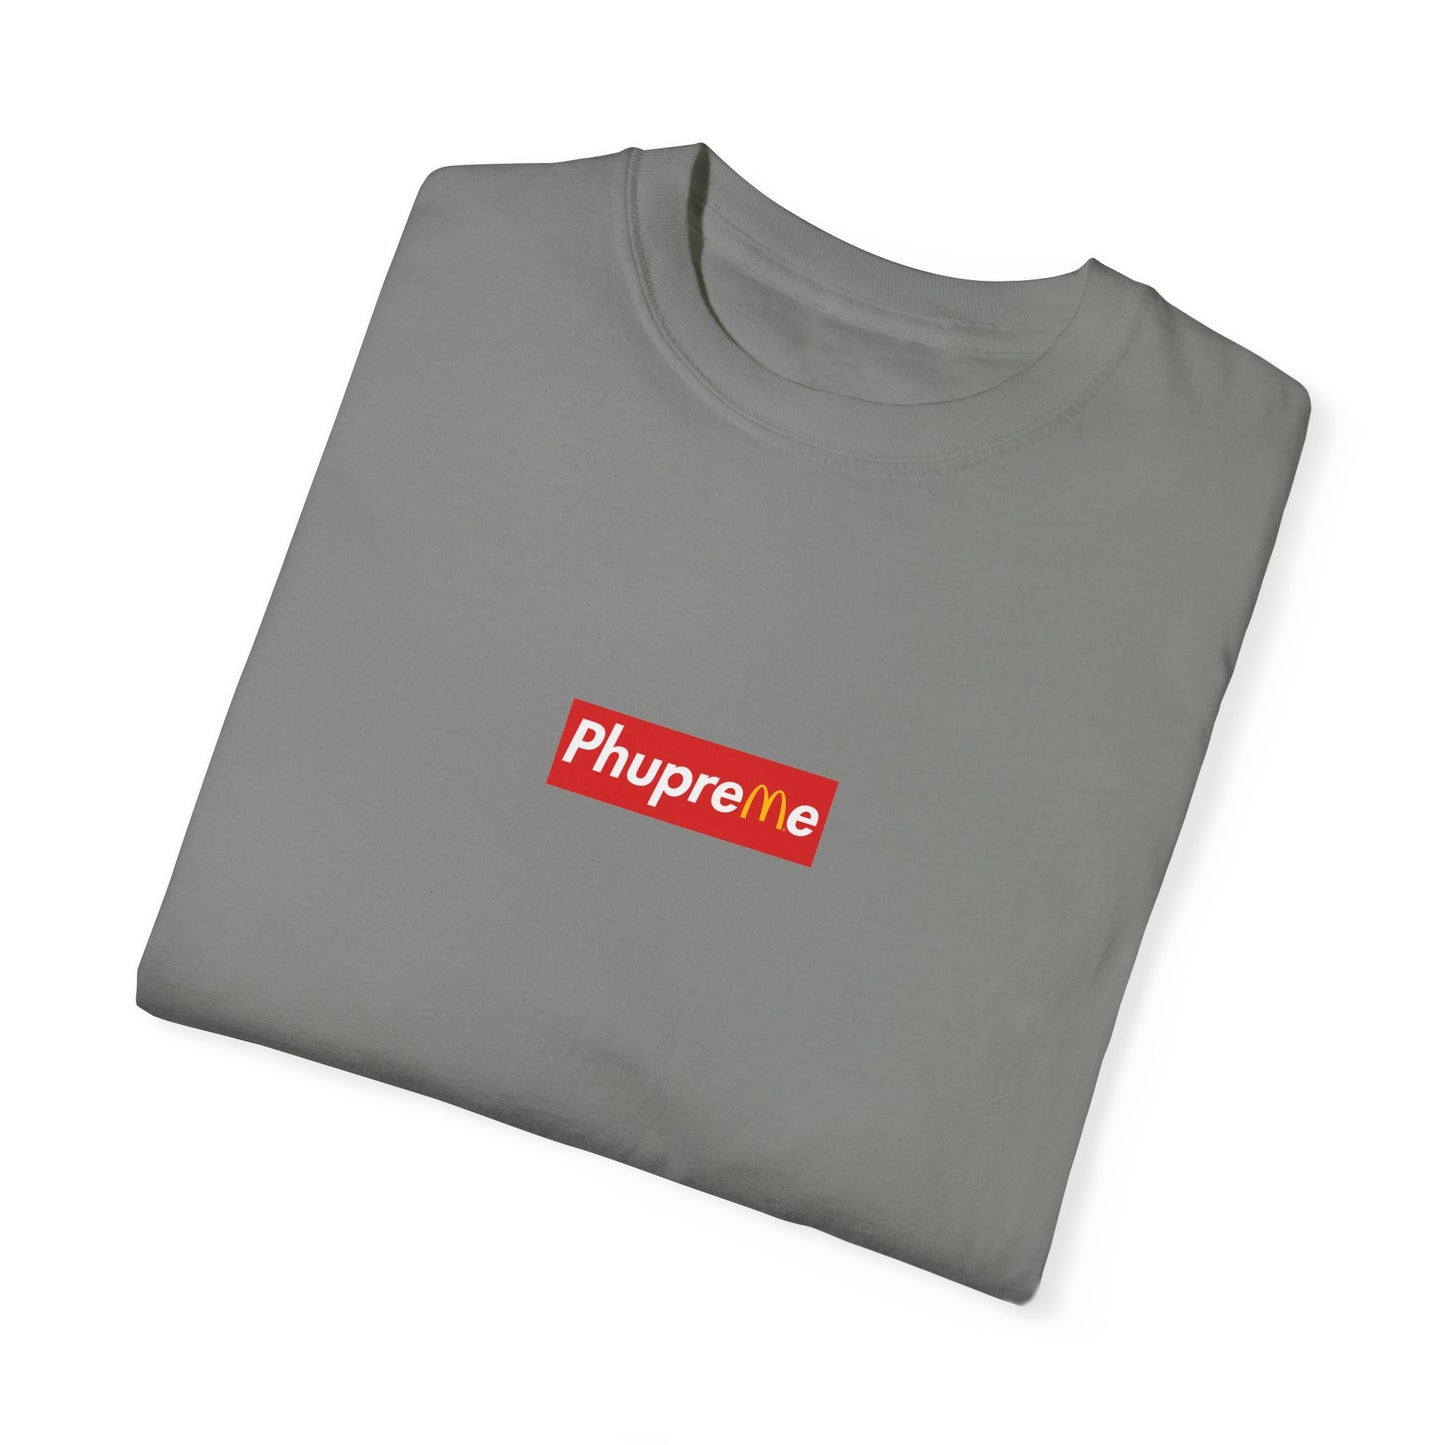 PhupreMe Happy meal T-shirt